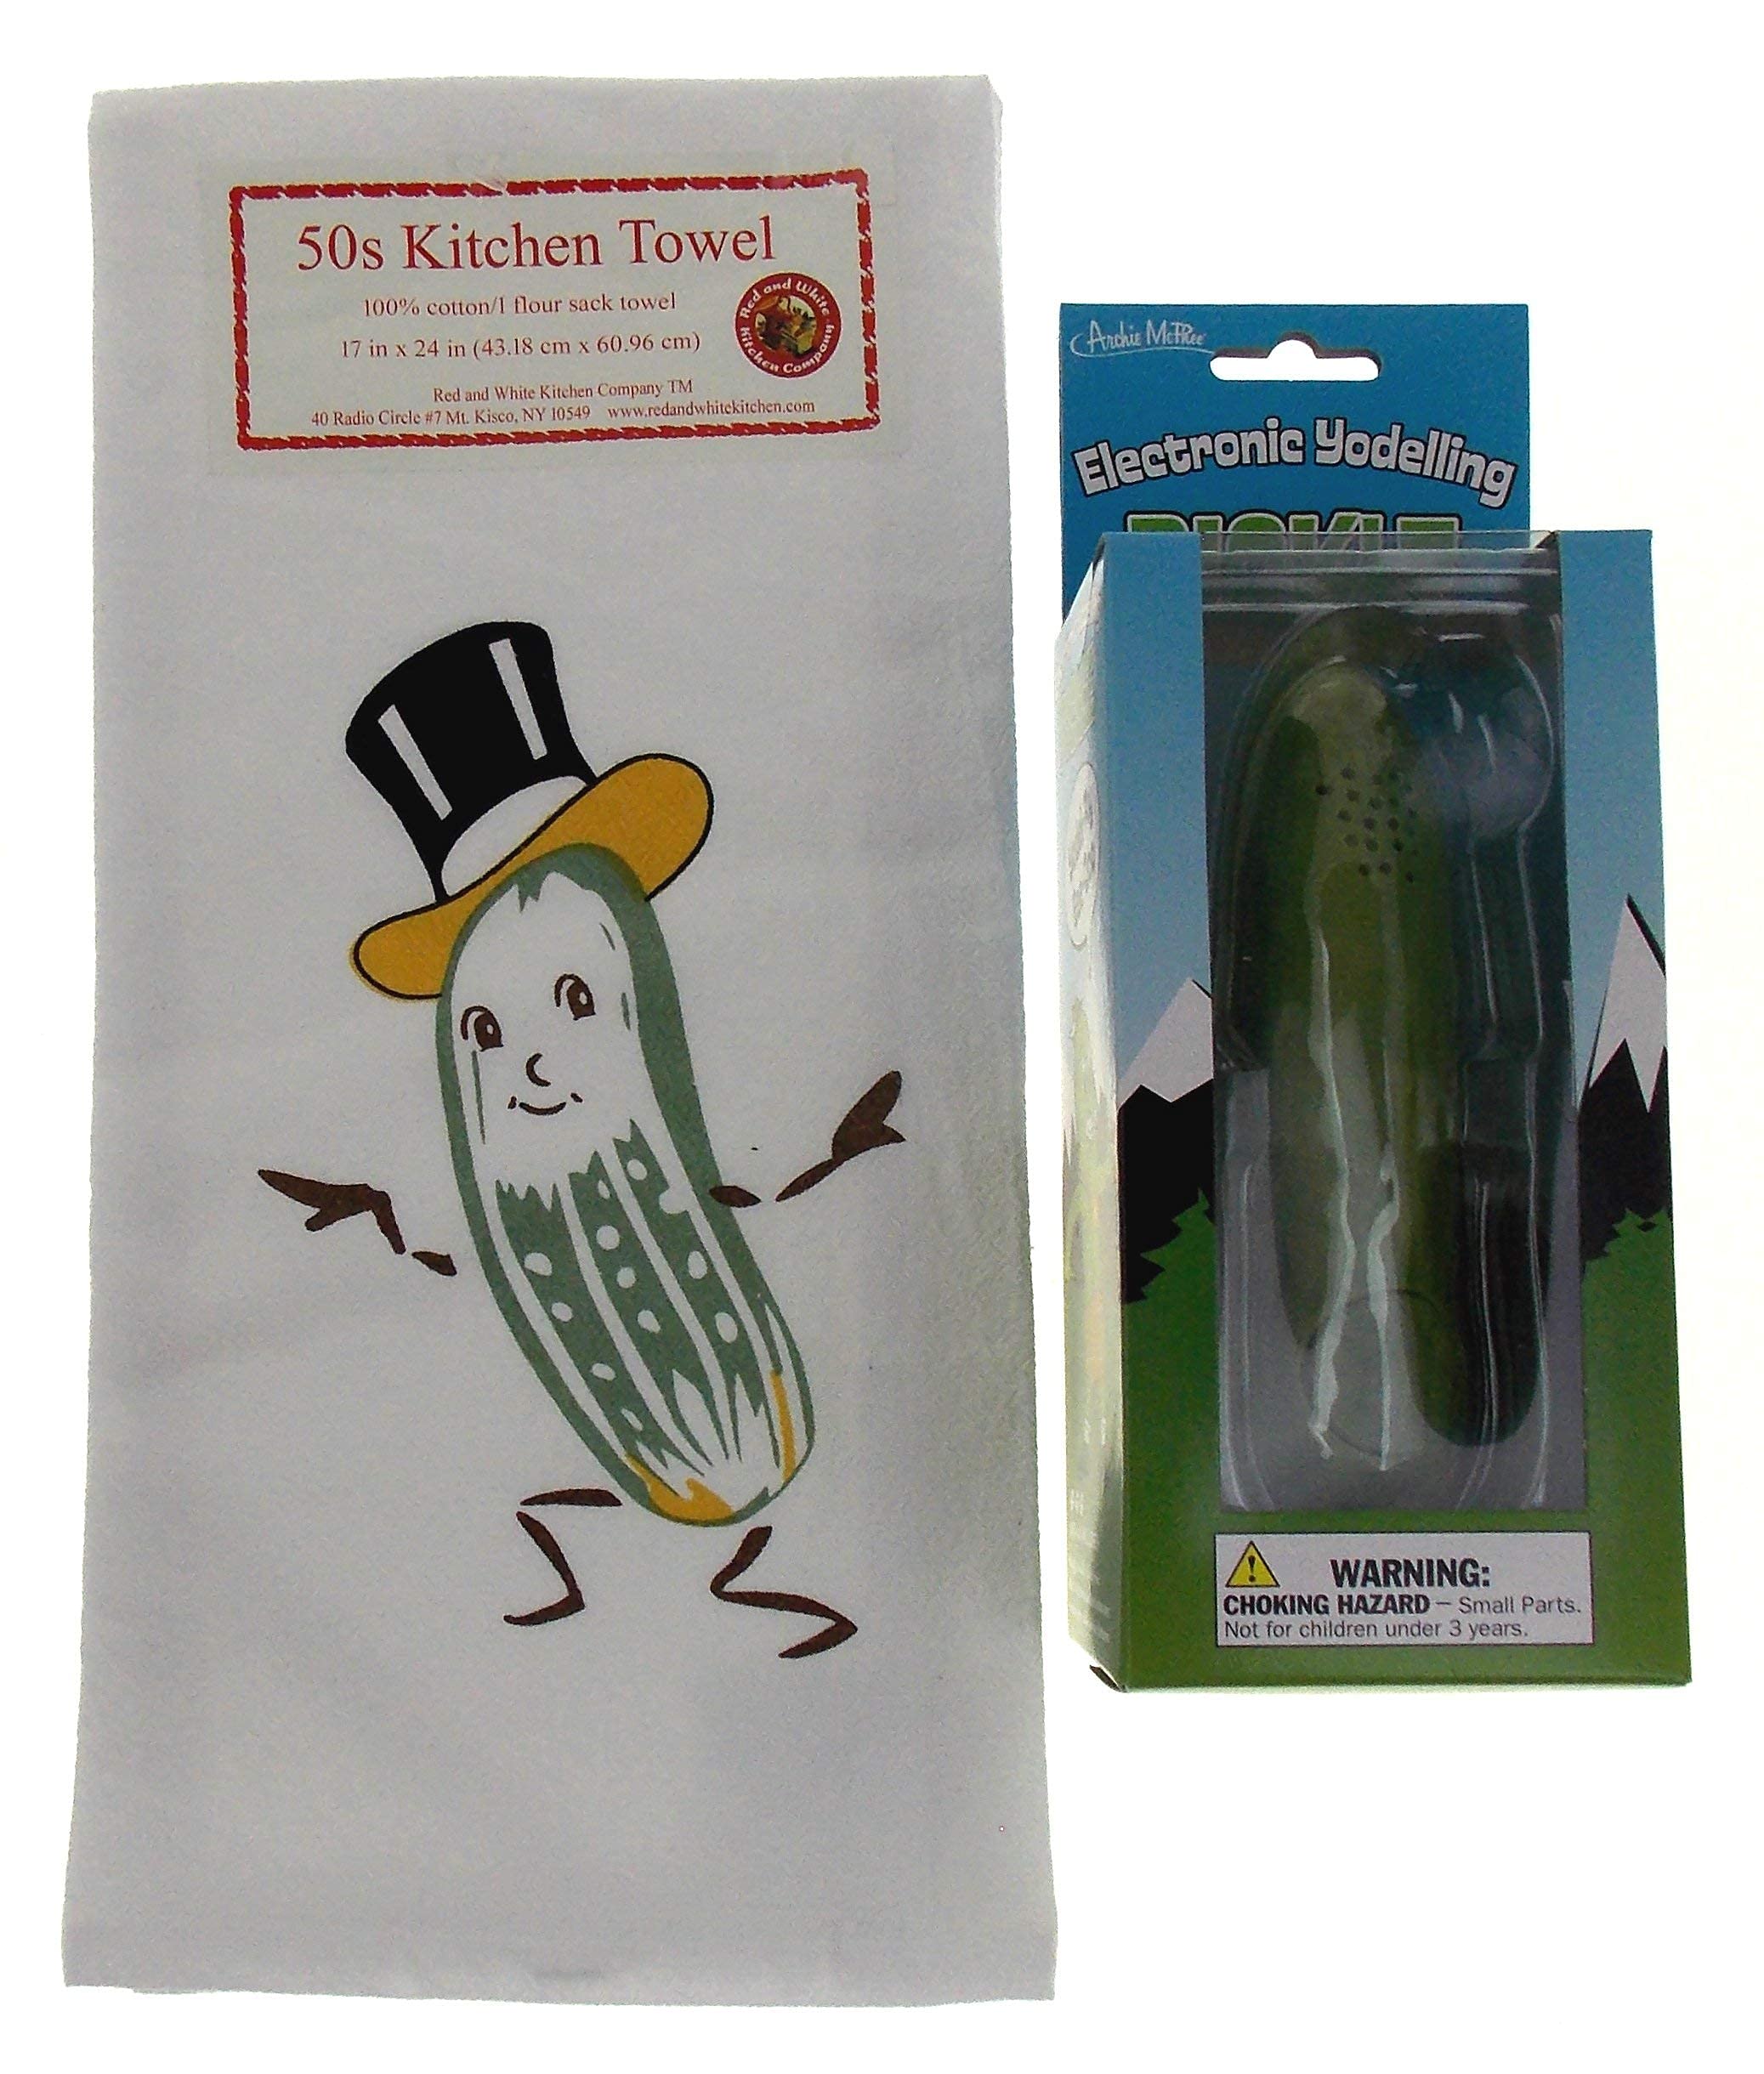 Yodeling Pickle Bundled with a Mr Pickle Kitchen Towel